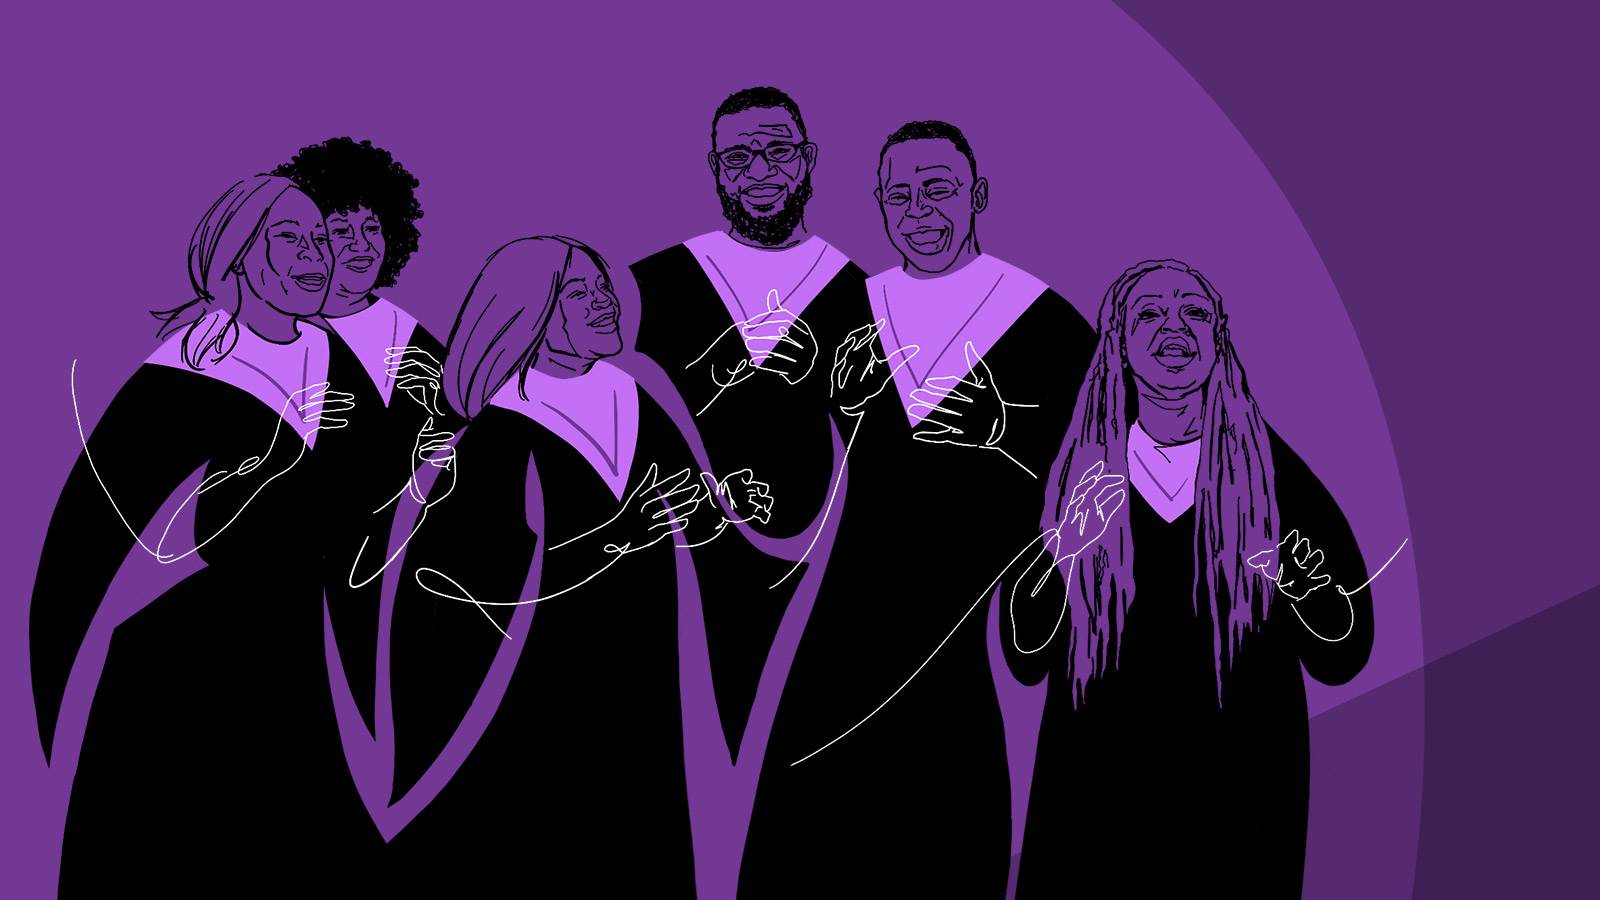 drawing of gospel singers on purple background